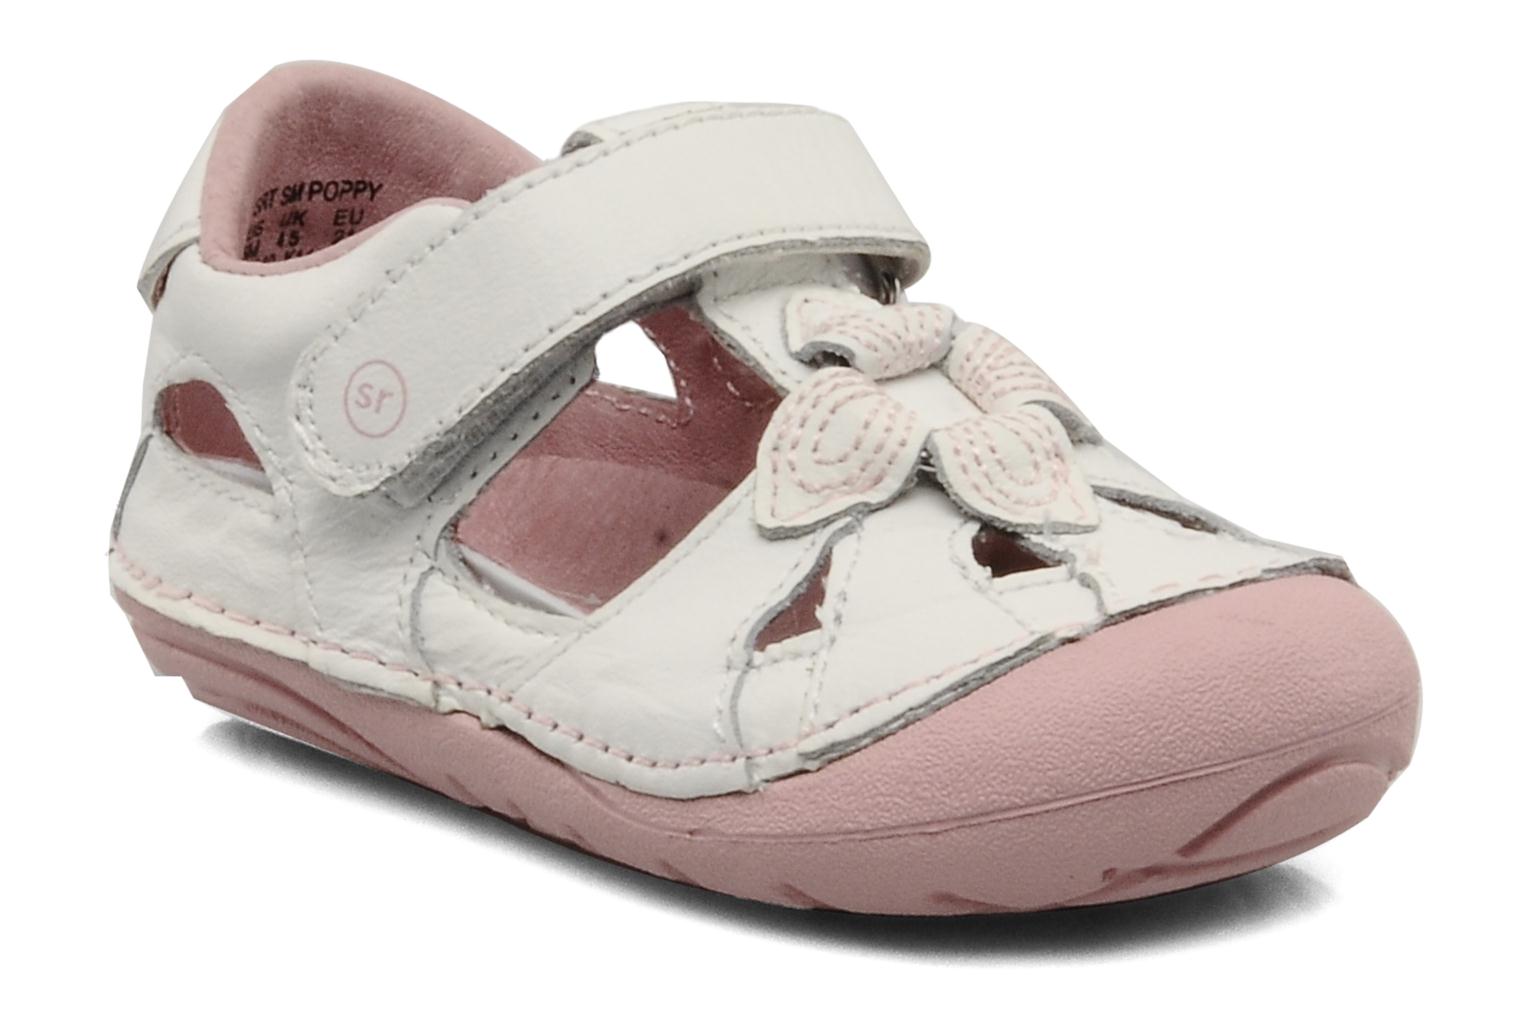 Foto Zapatos con velcro Stride Rite Srt Sm Poppy Niños foto 151447